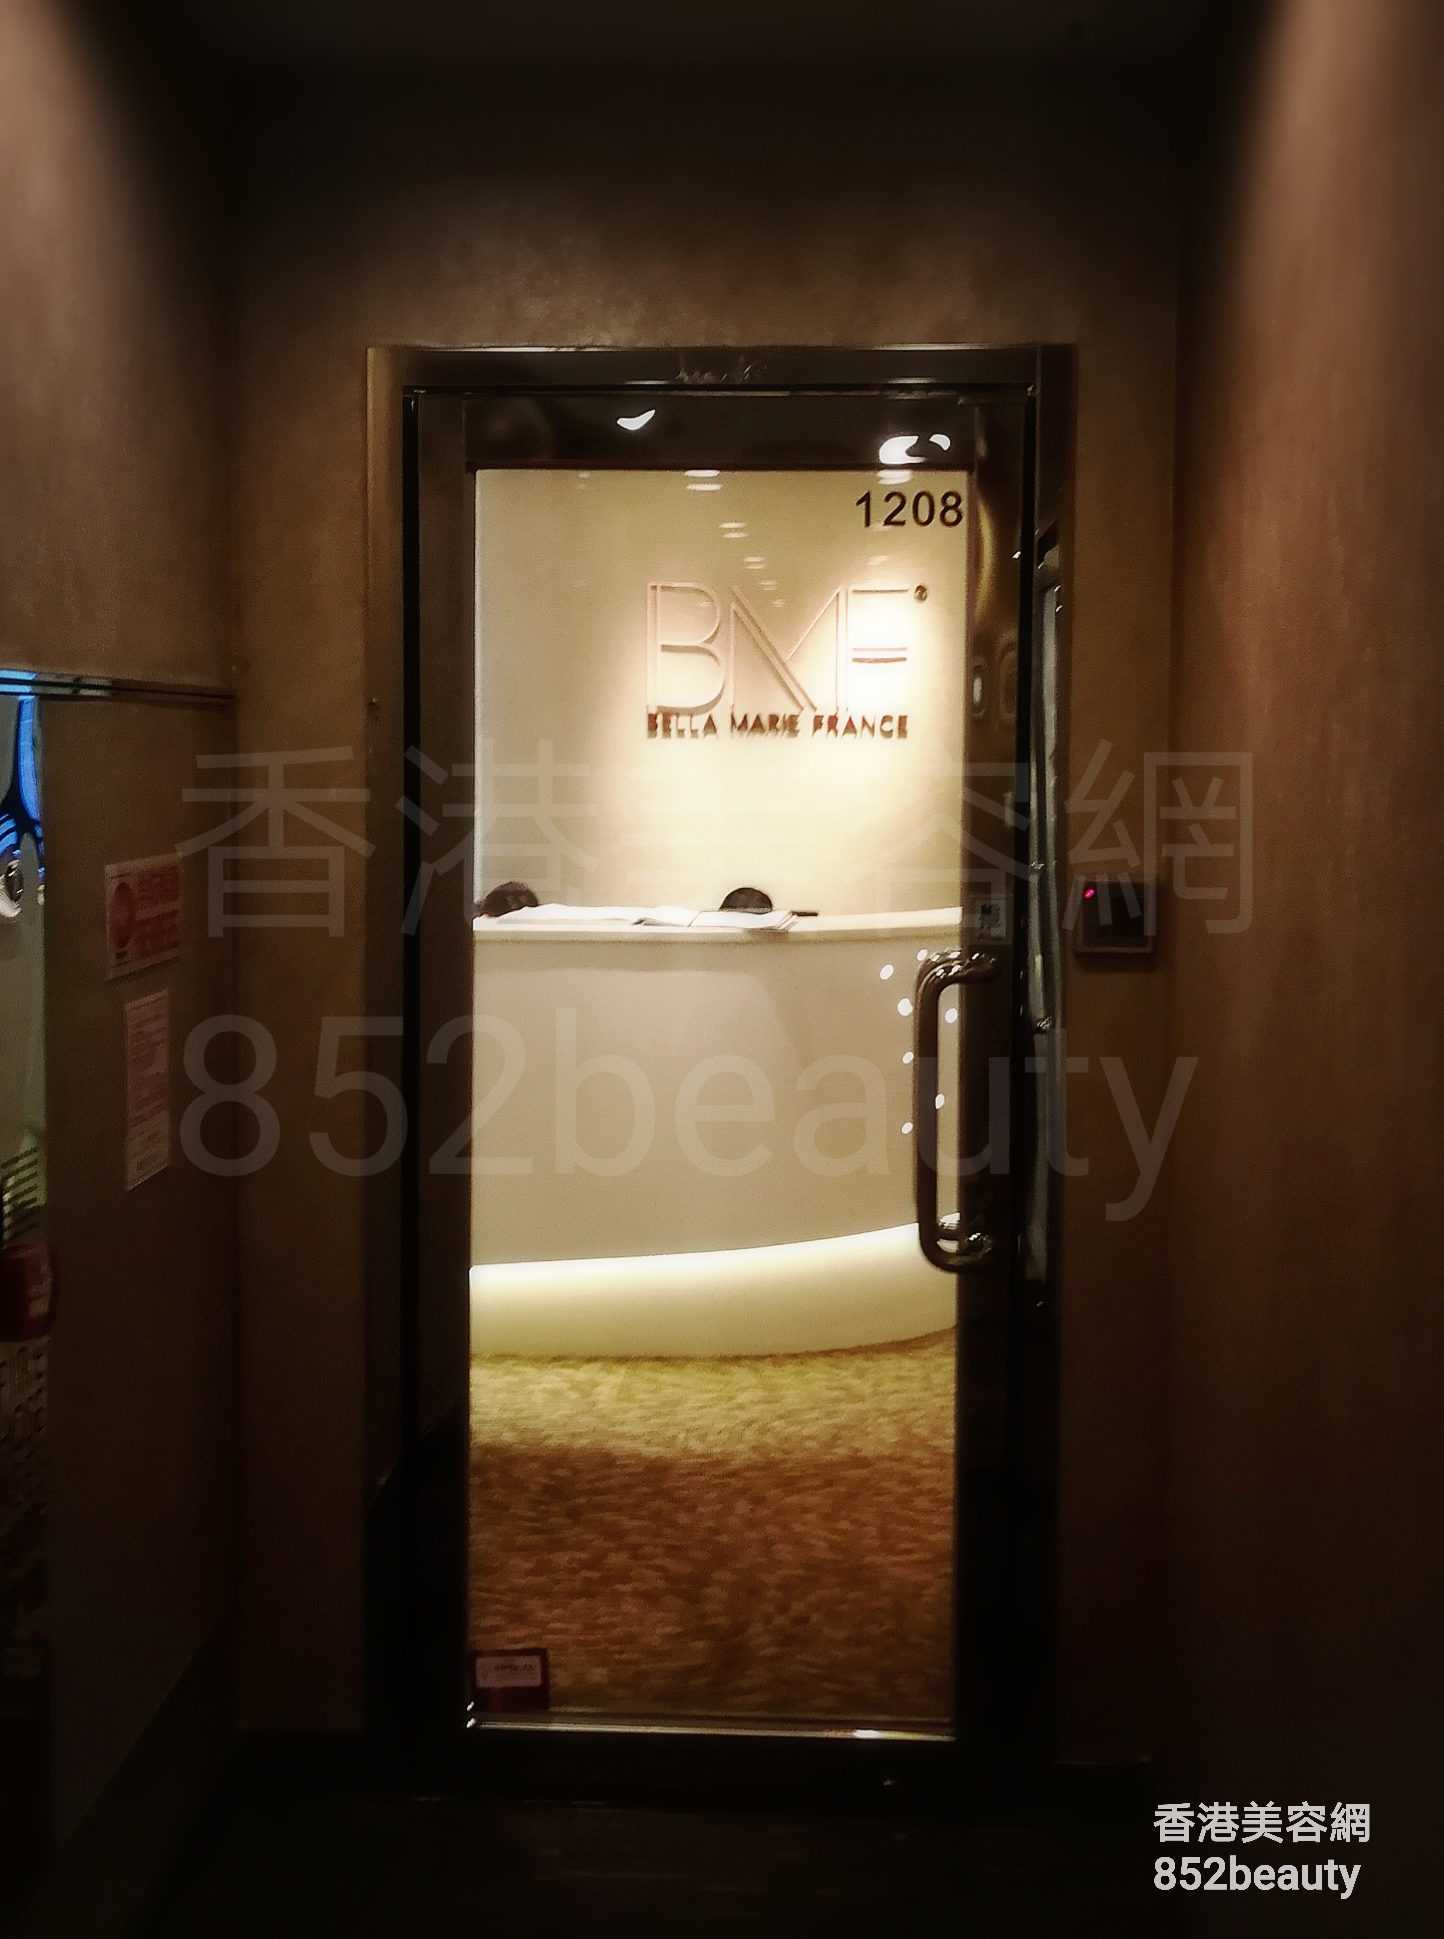 香港美容網 Hong Kong Beauty Salon 美容院 / 美容師: OASIS Medical (沙田店)